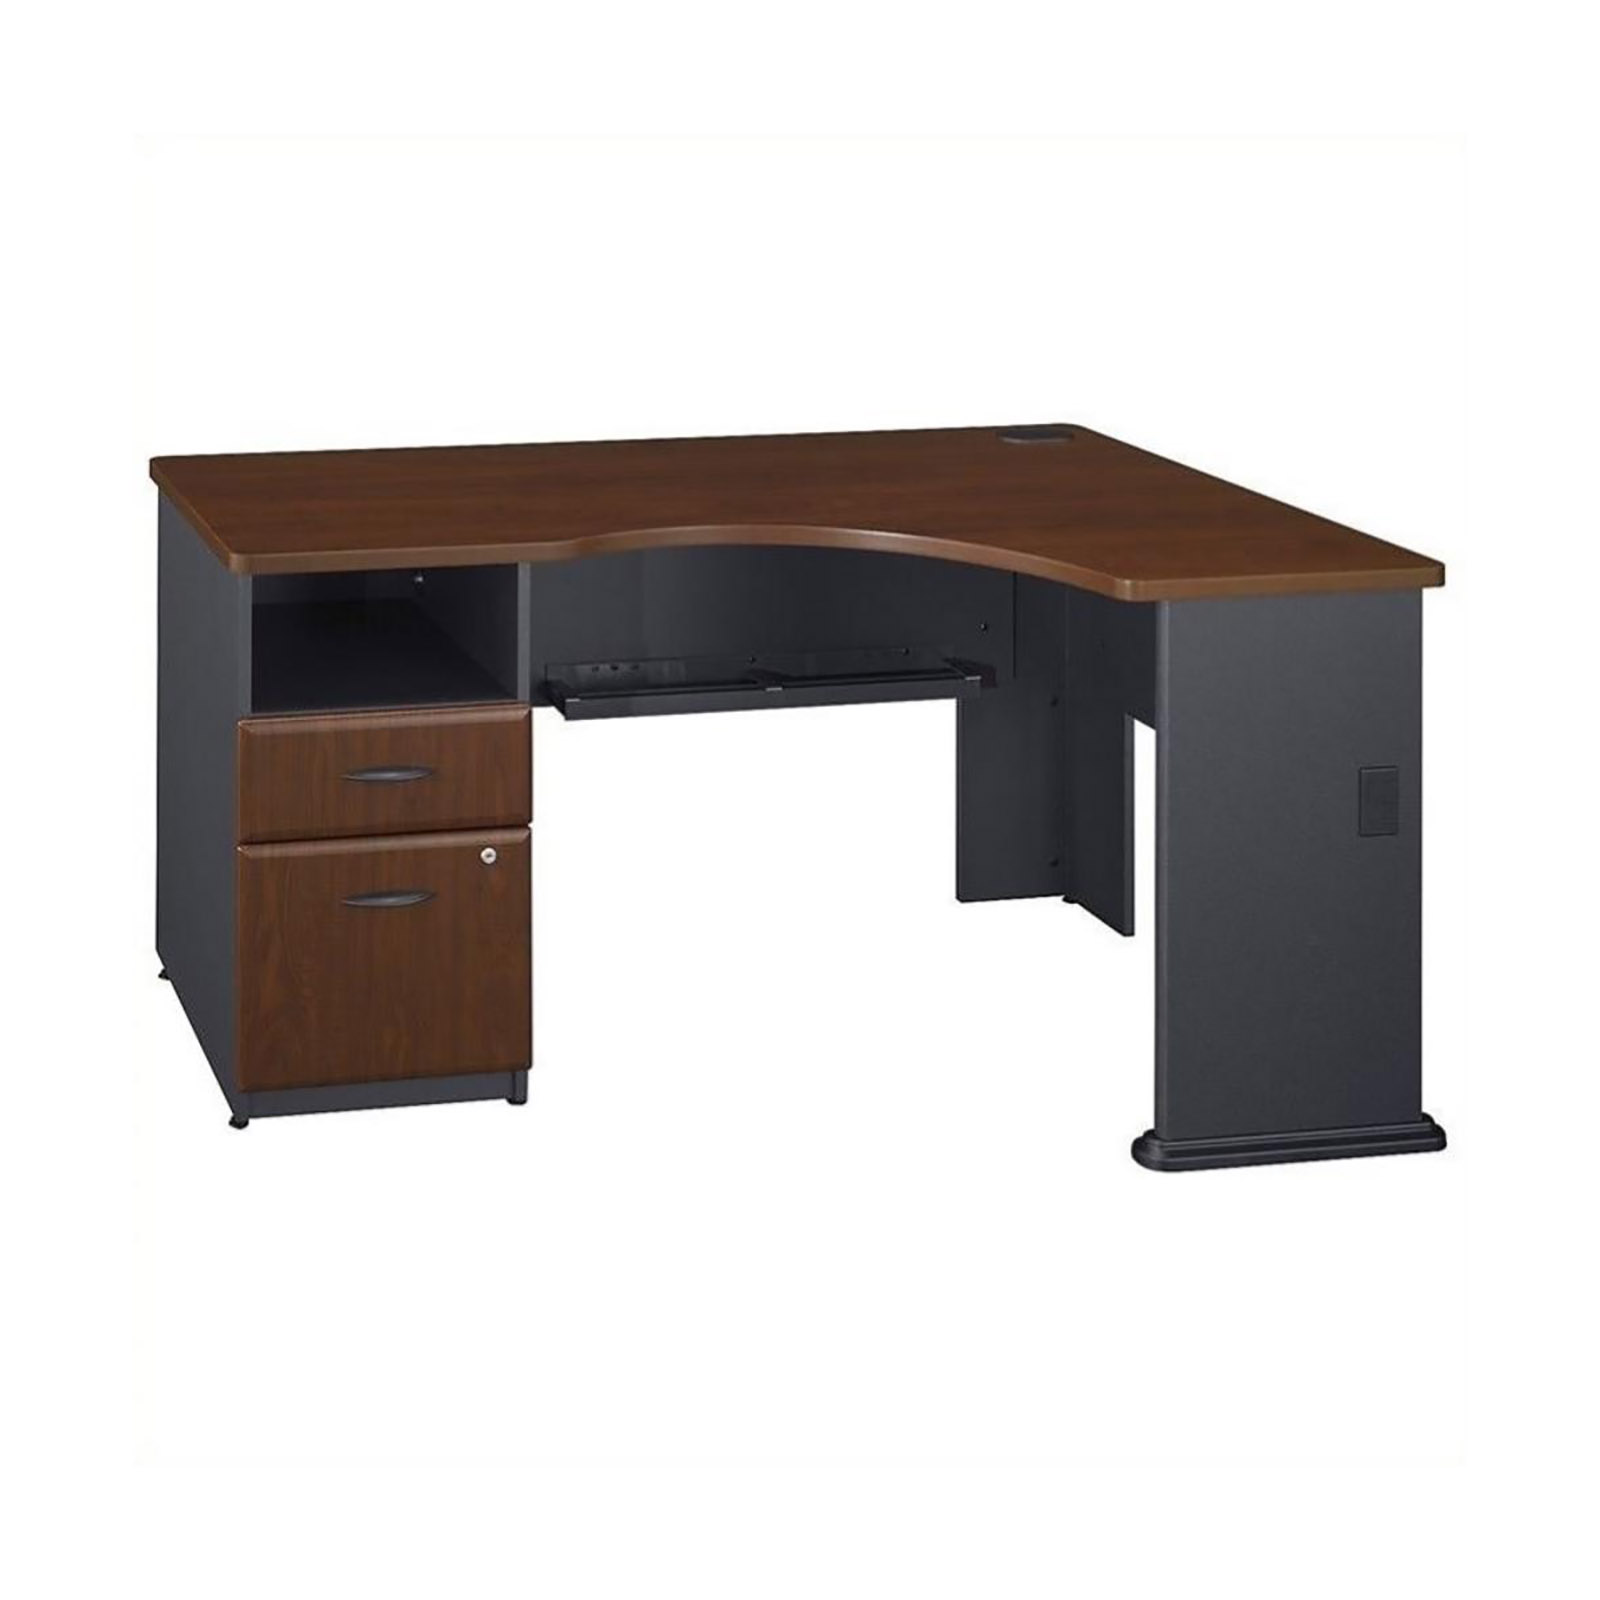 BBF WC94428PA Series A Corner Desk with 2 Drawer Pedestal - Hansen Cherry